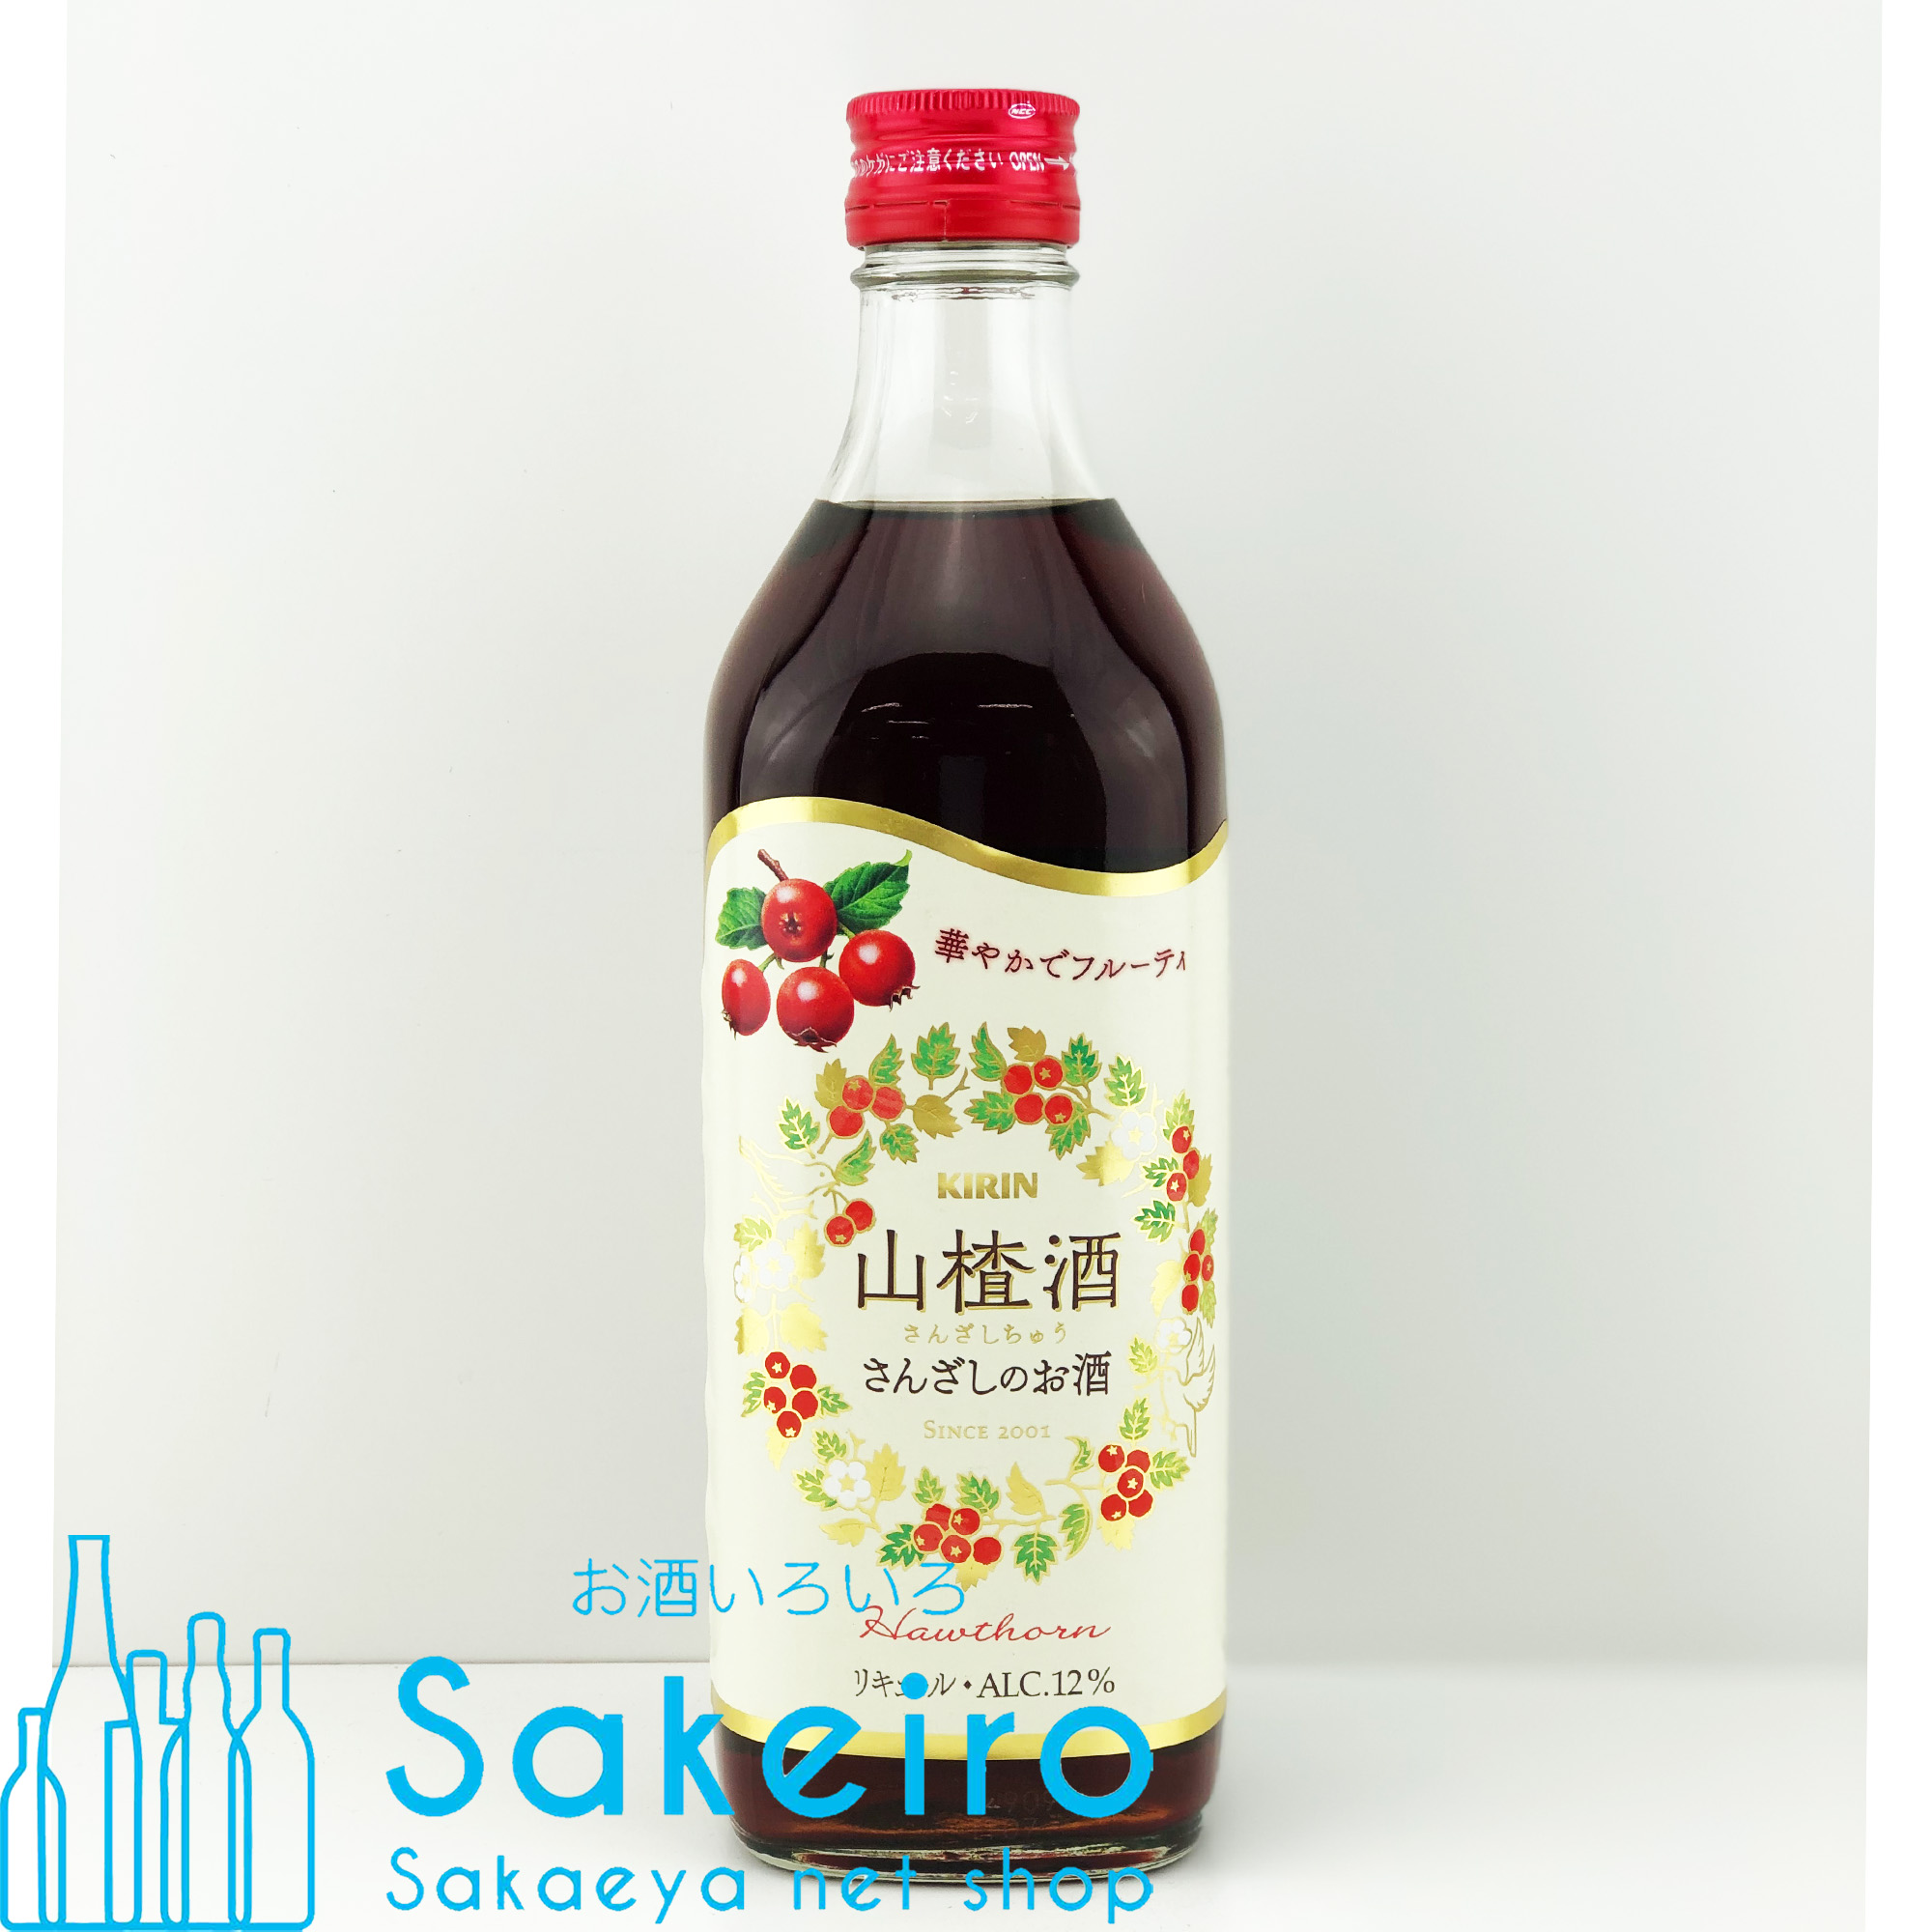 KIRIN 山?酒 12％ 500ml - お酒いろいろ Sakeiro -Sakaeya net shop-